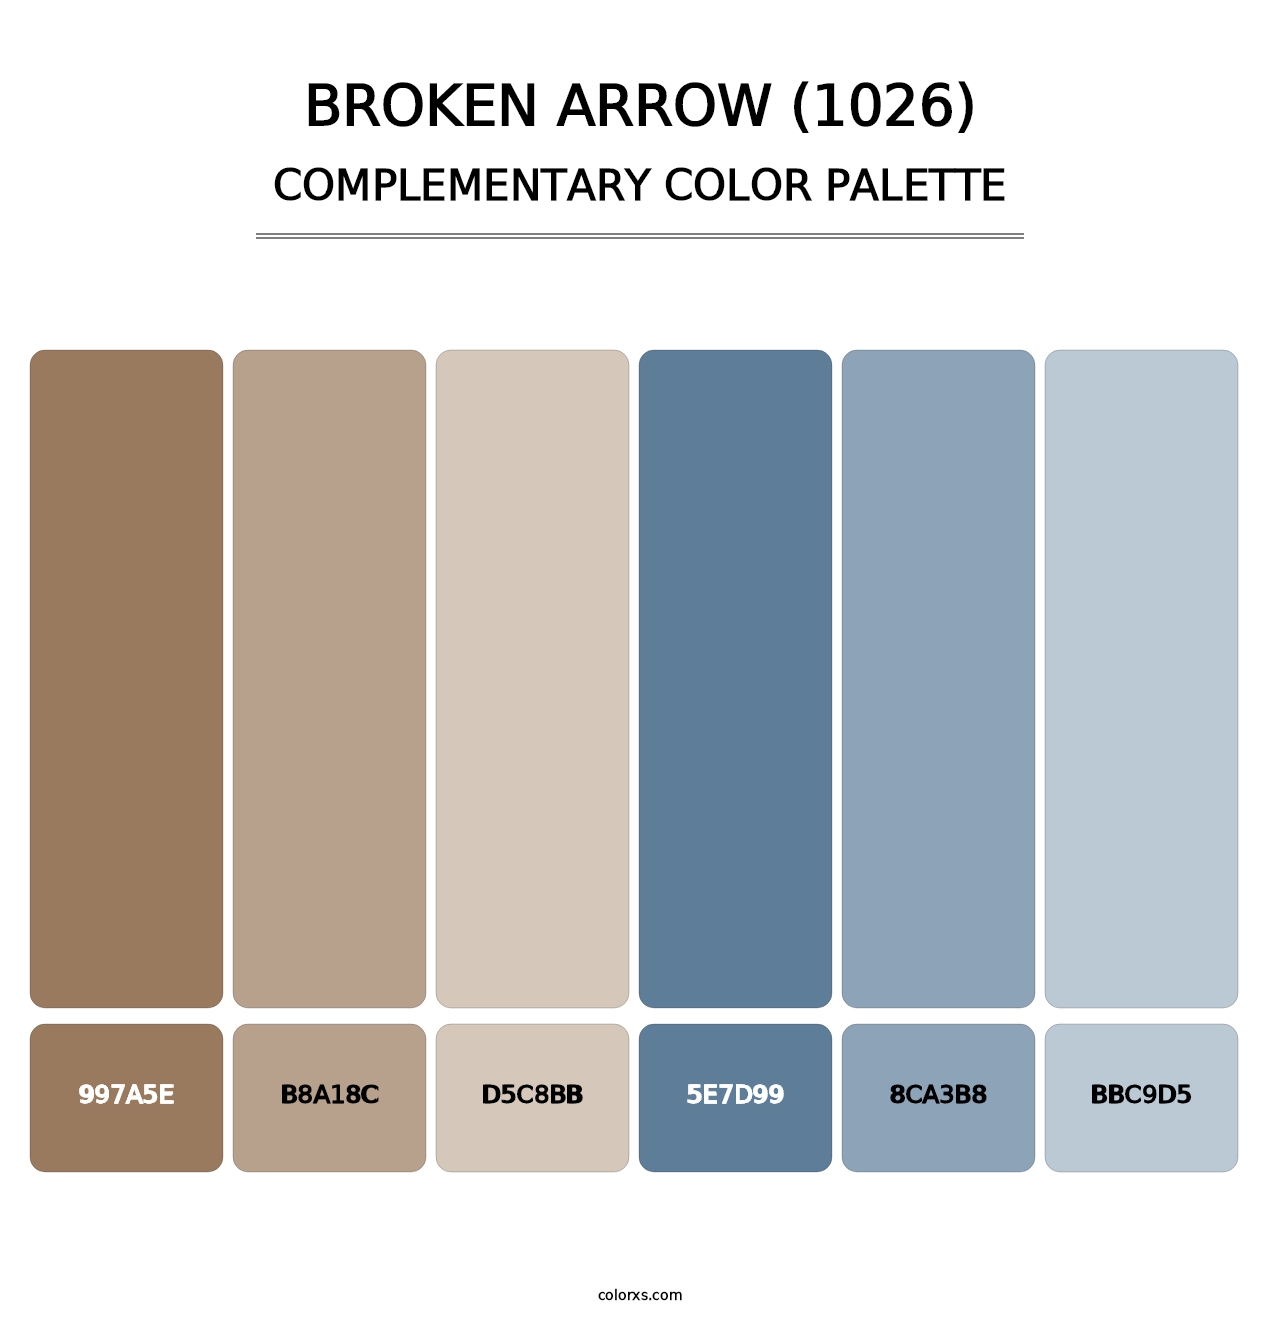 Broken Arrow (1026) - Complementary Color Palette